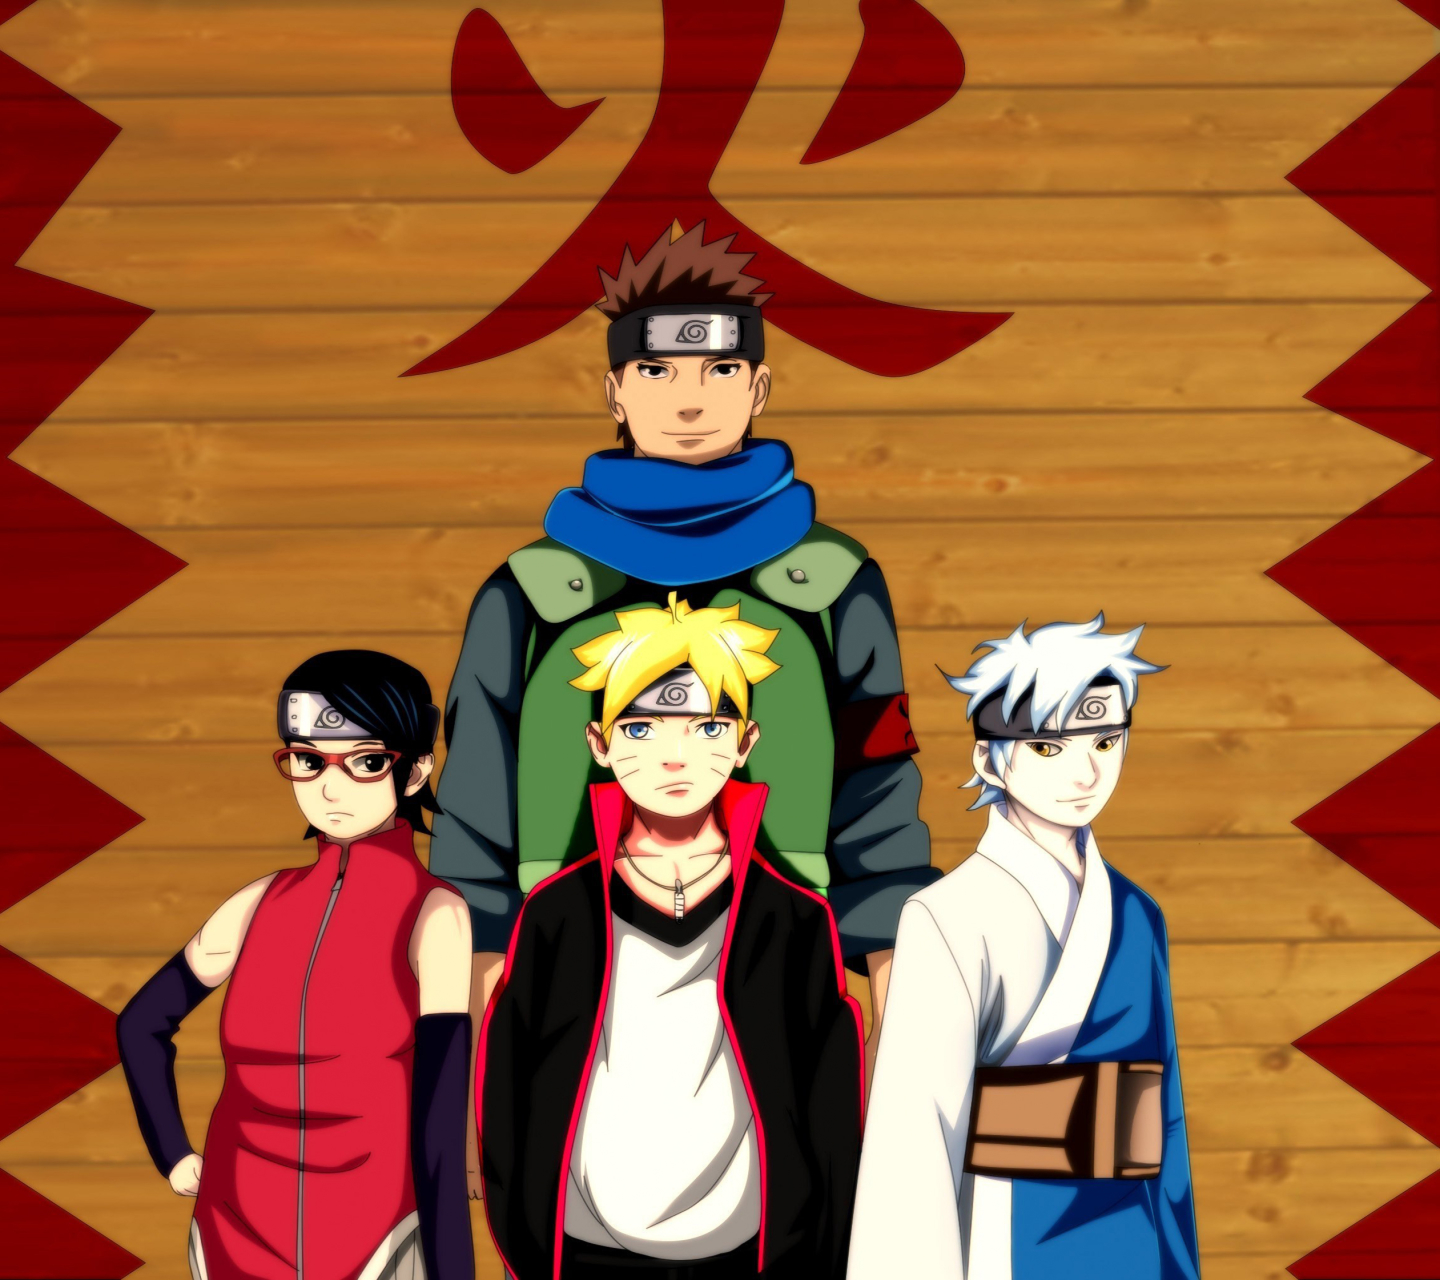 Téléchargez gratuitement l'image Naruto, Animé, Konohamaru Sarutobi, Boruto : Naruto Le Film, Sarada Uchiwa, Boruto Uzumaki, Mitsuki (Naruto) sur le bureau de votre PC